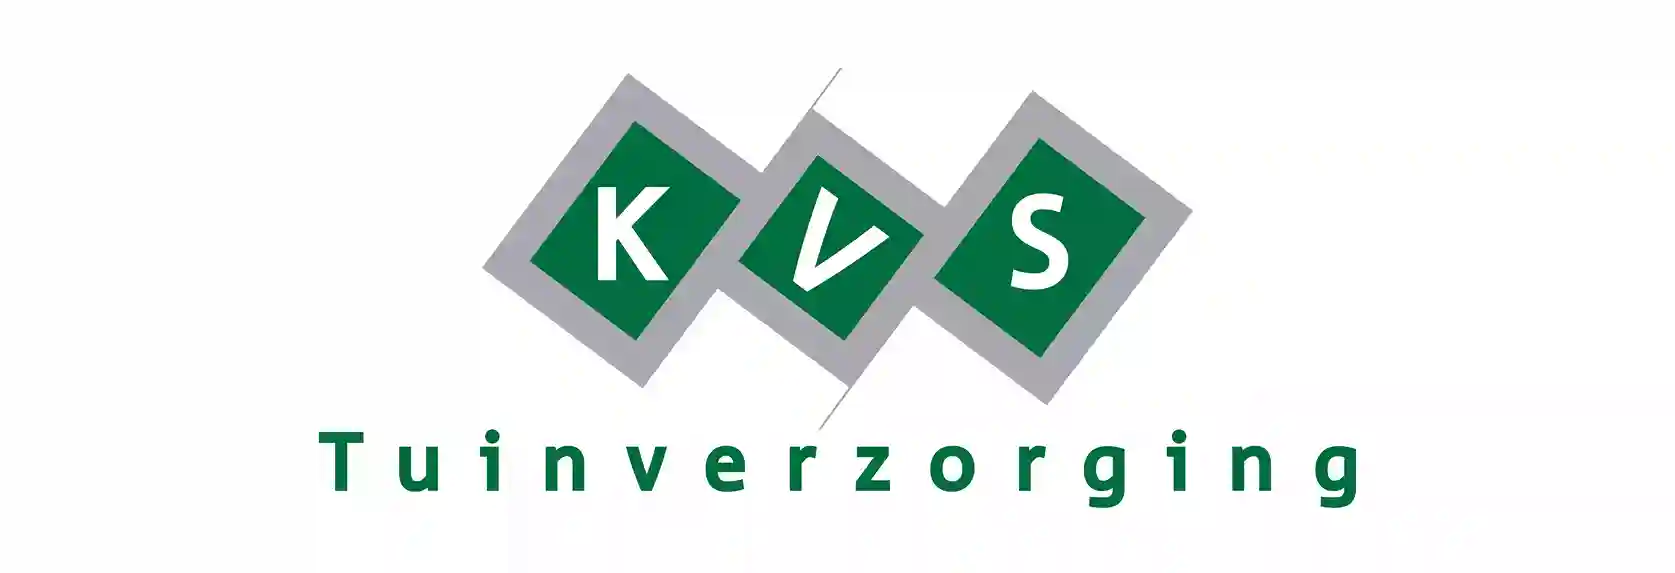 freecompress-Kees-van-Schaik-Tuinverzorging-150x50